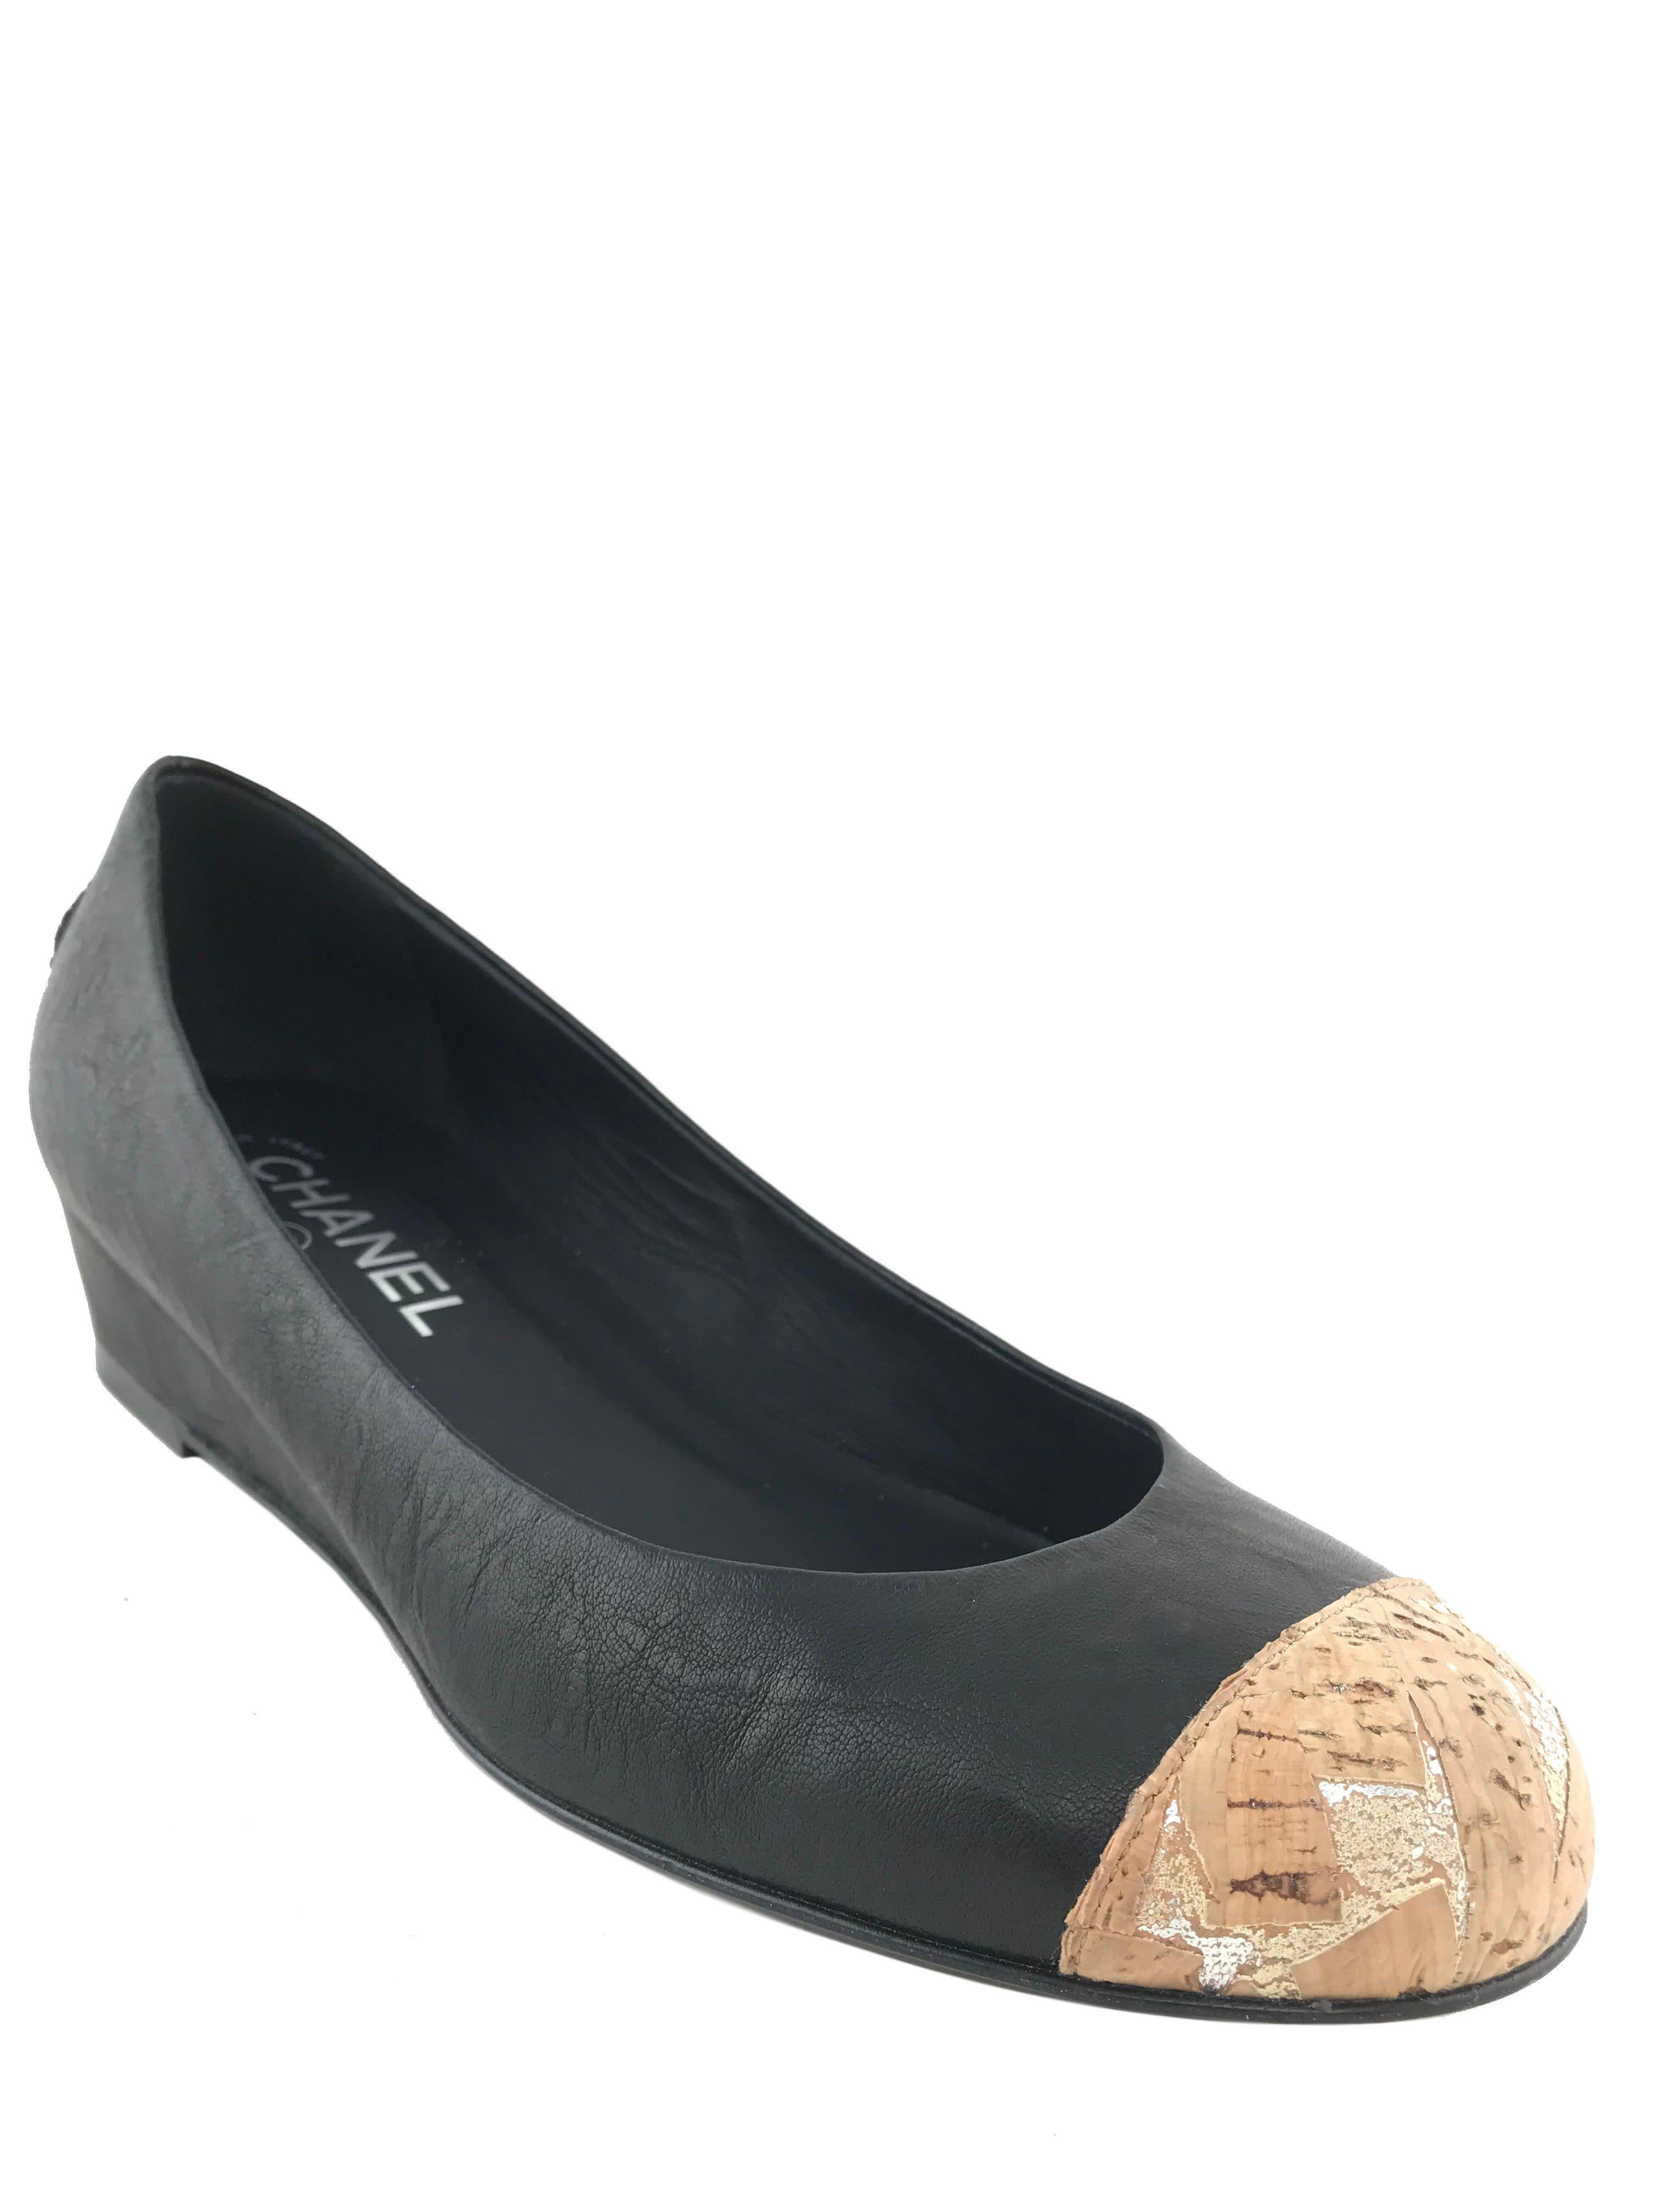 Chanel Interlocking CC Wedge Sandals in Black | MTYCI